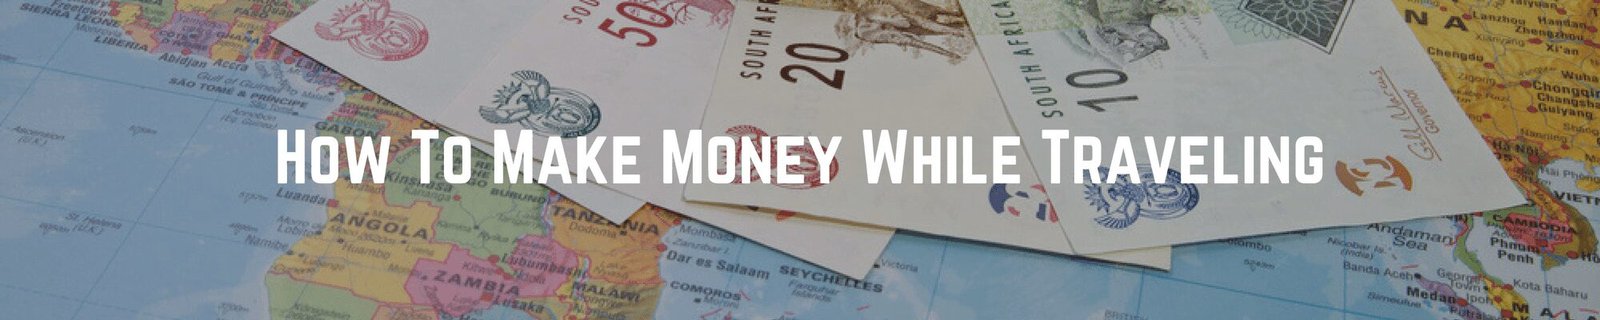 wordpress blog post image7 How To Make Money While Traveling